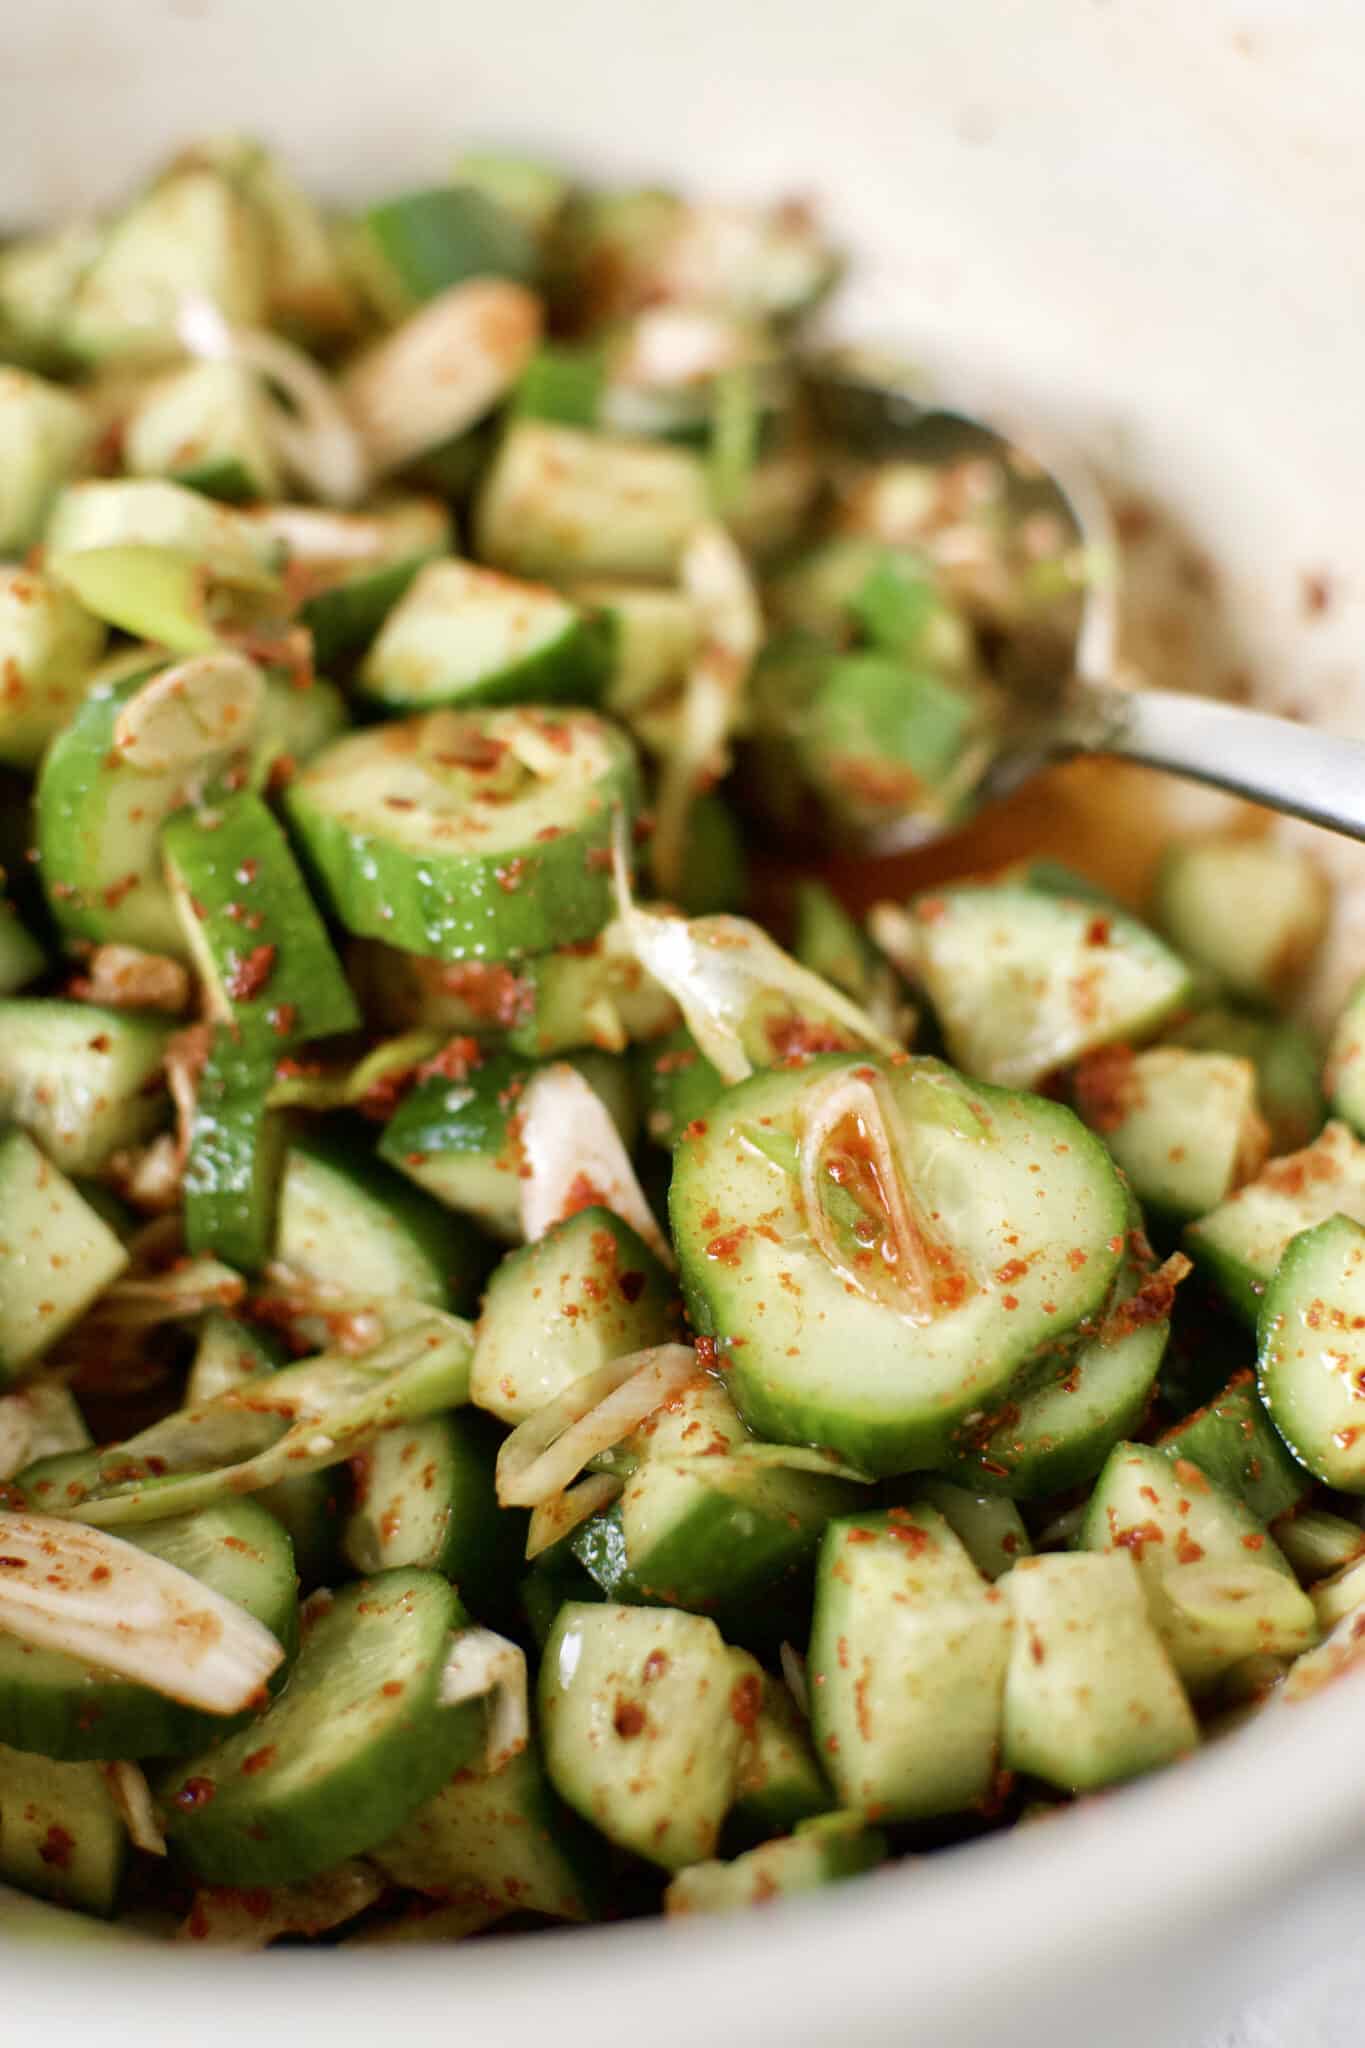 Joanna Gaines Cucumber Kimchi Salad prepared by KendellKreations.com